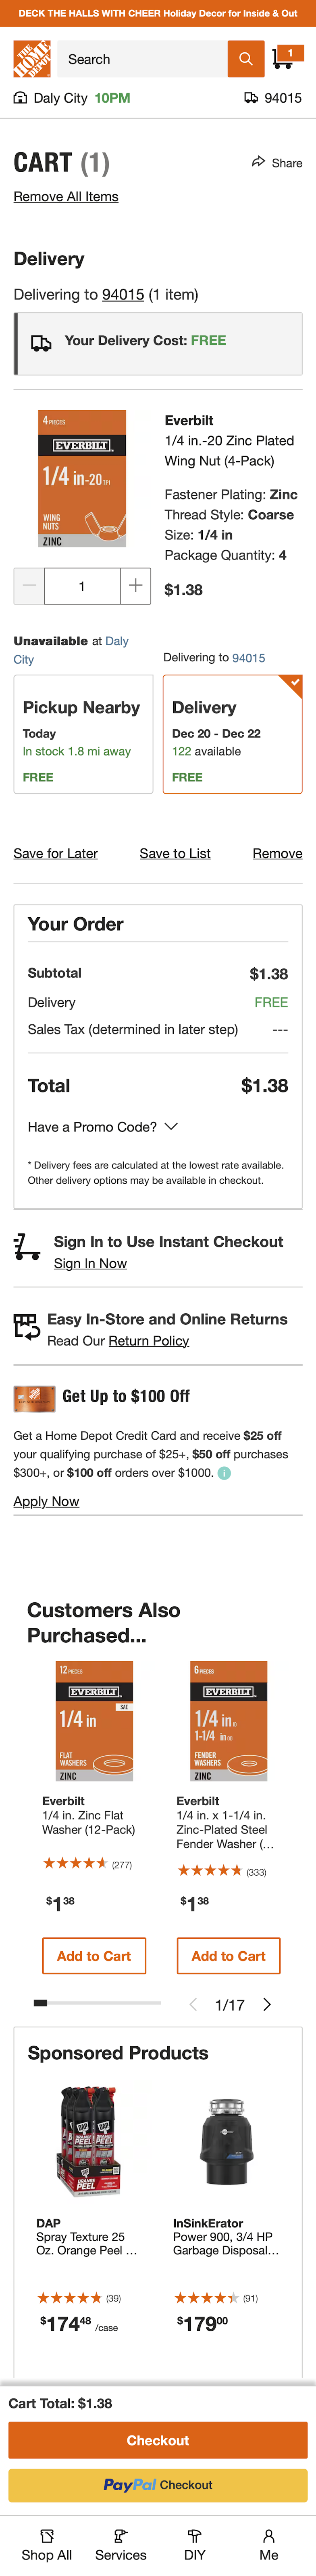 Mobile screenshot of Home Depot